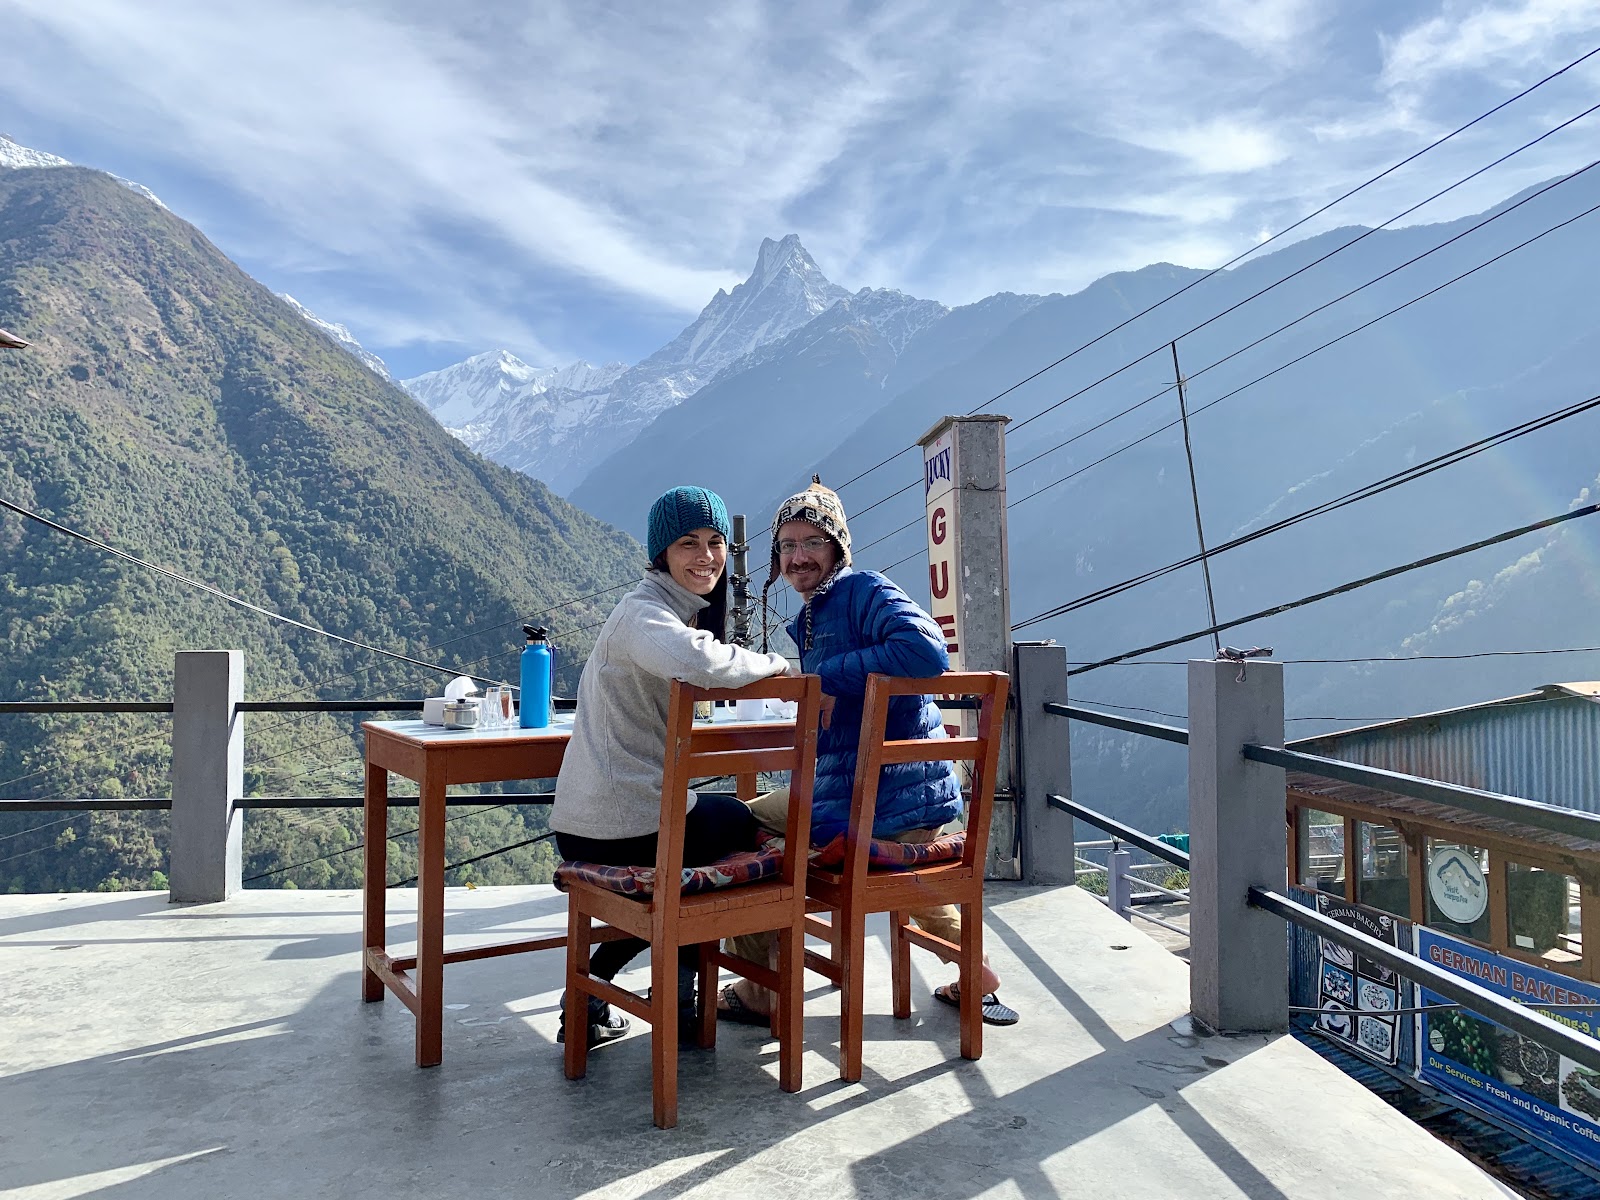 Morning views in Nepal